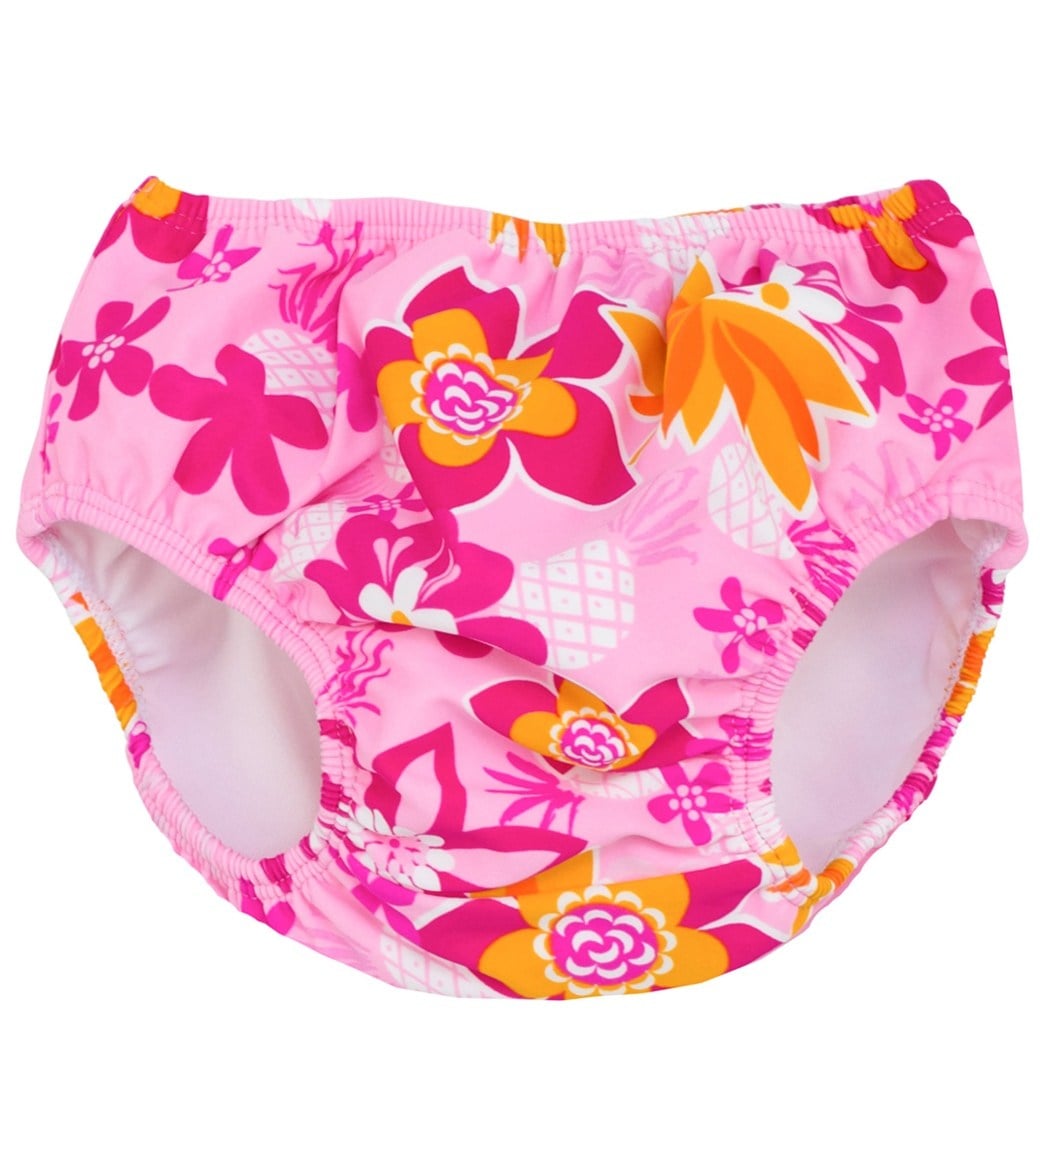 Tuga Girls' Swim Diapers 3 Mo-30 Mo - Taffy Medium 6-12 Mo Size Months - Swimoutlet.com